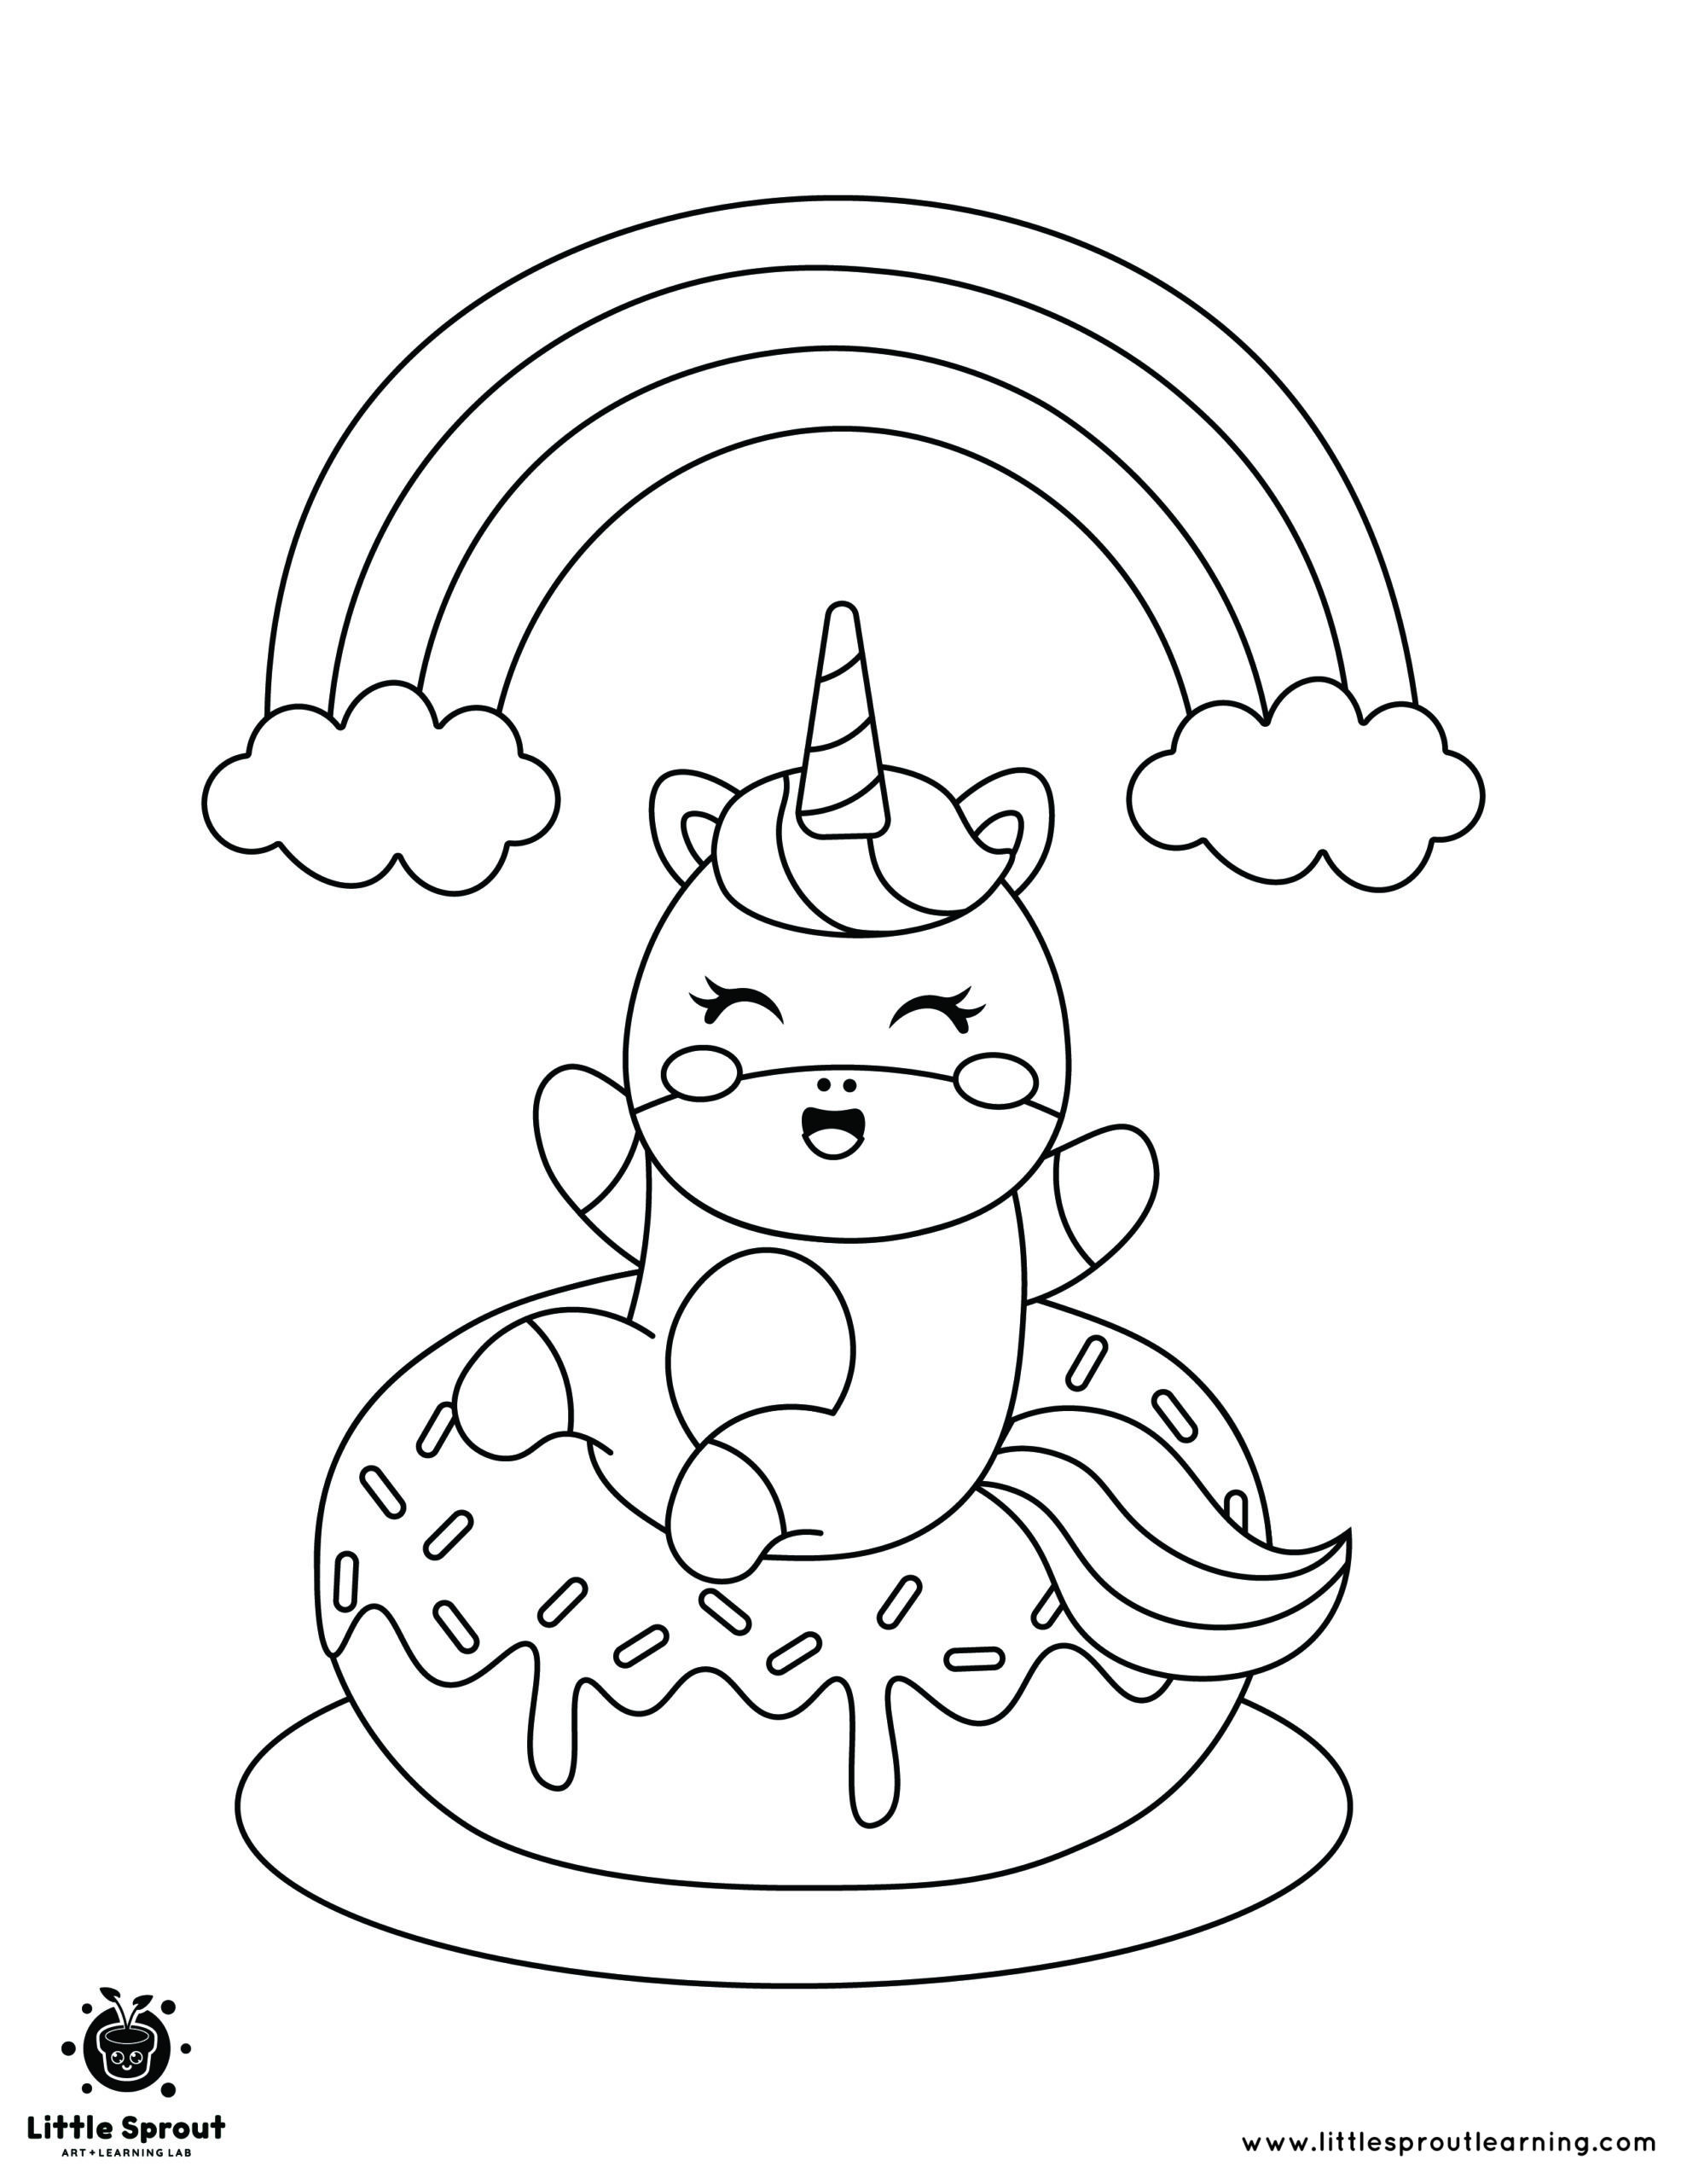 Rainbow donut unicorn coloring page